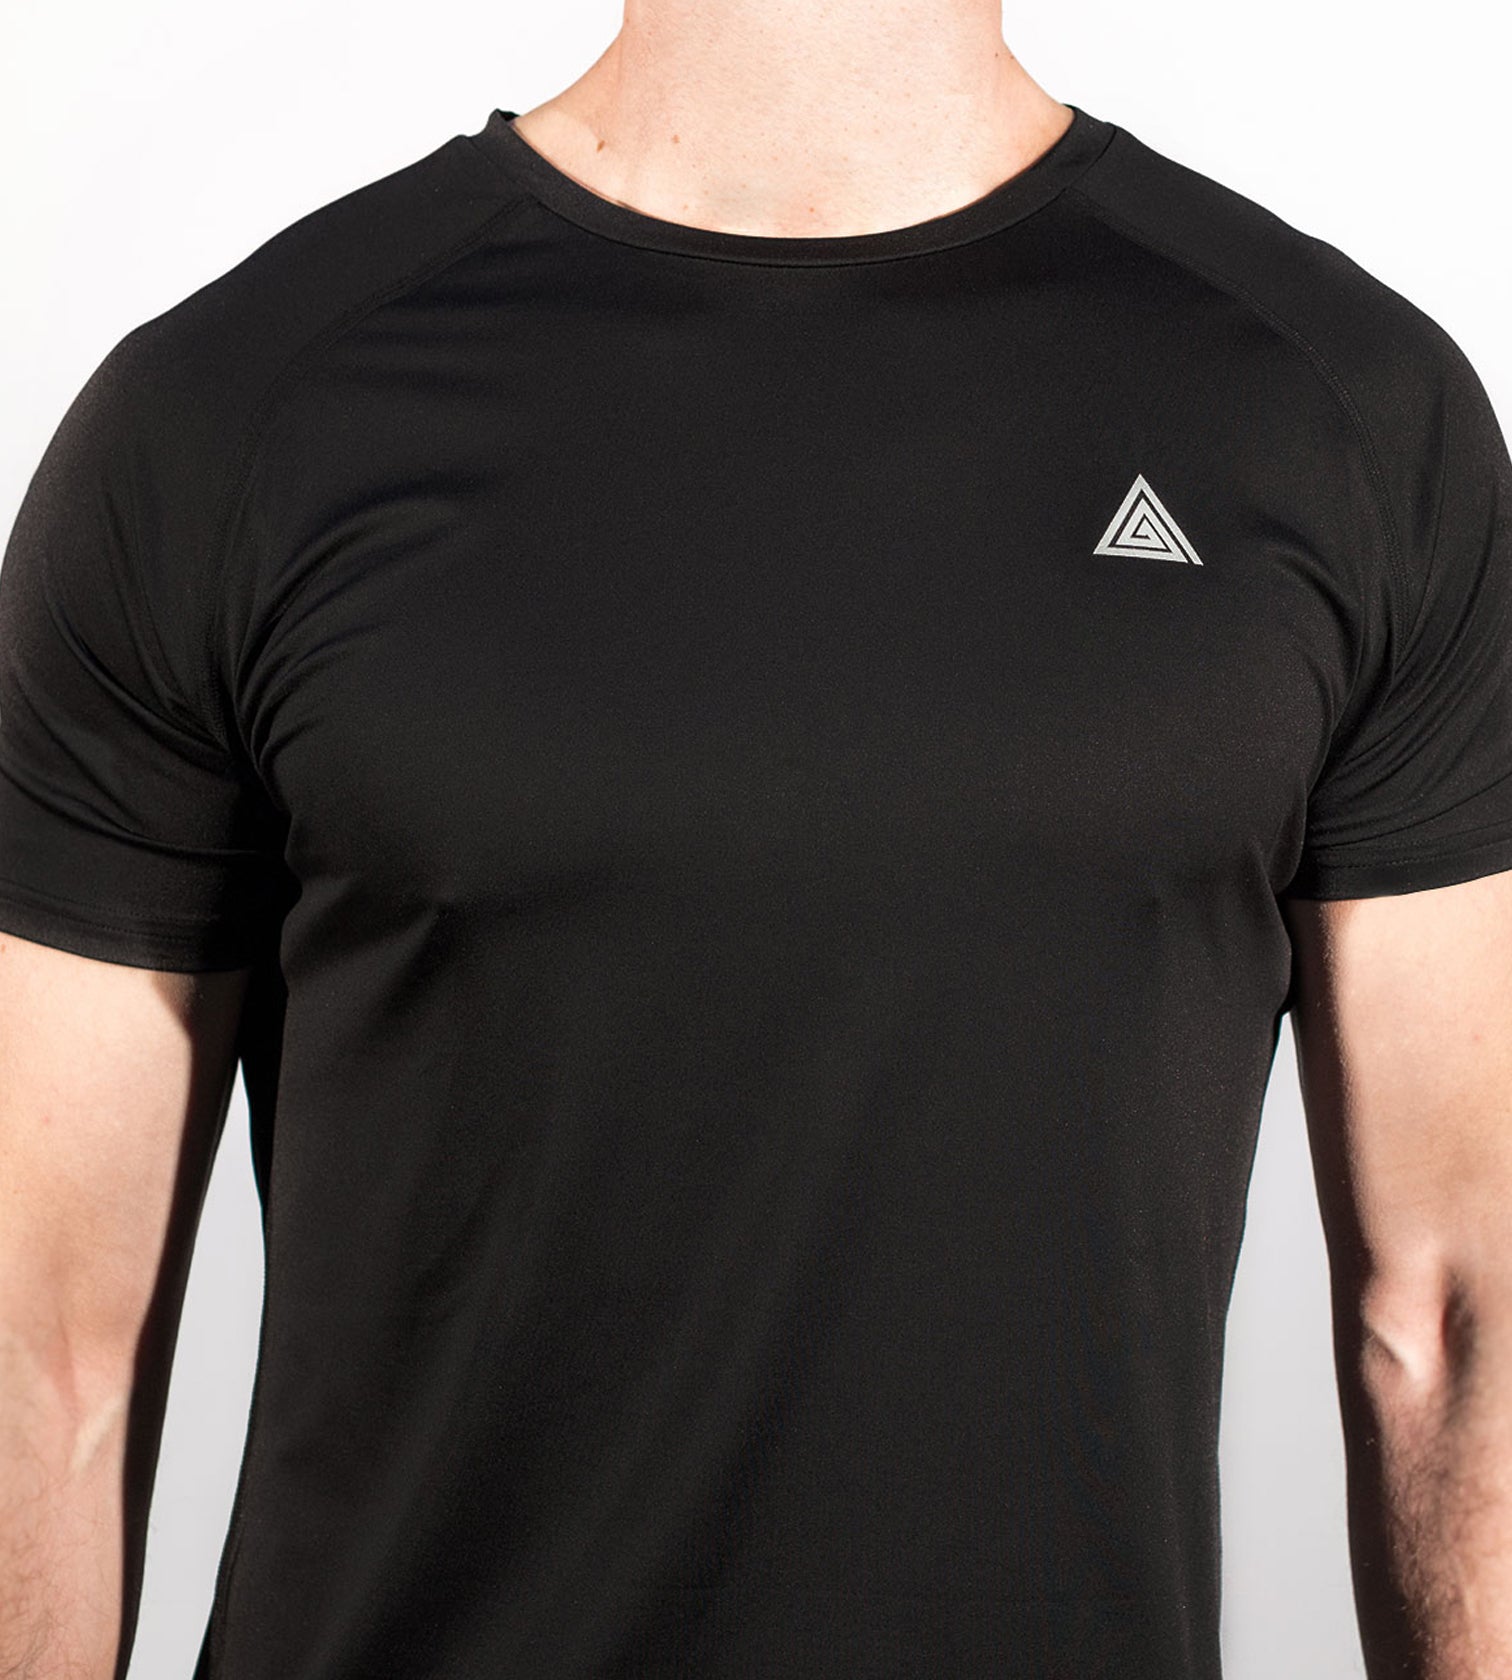 Camisetas tecnicas para running, trail running, crossfit, gym, trekking, de hombre - Upgrade Wear